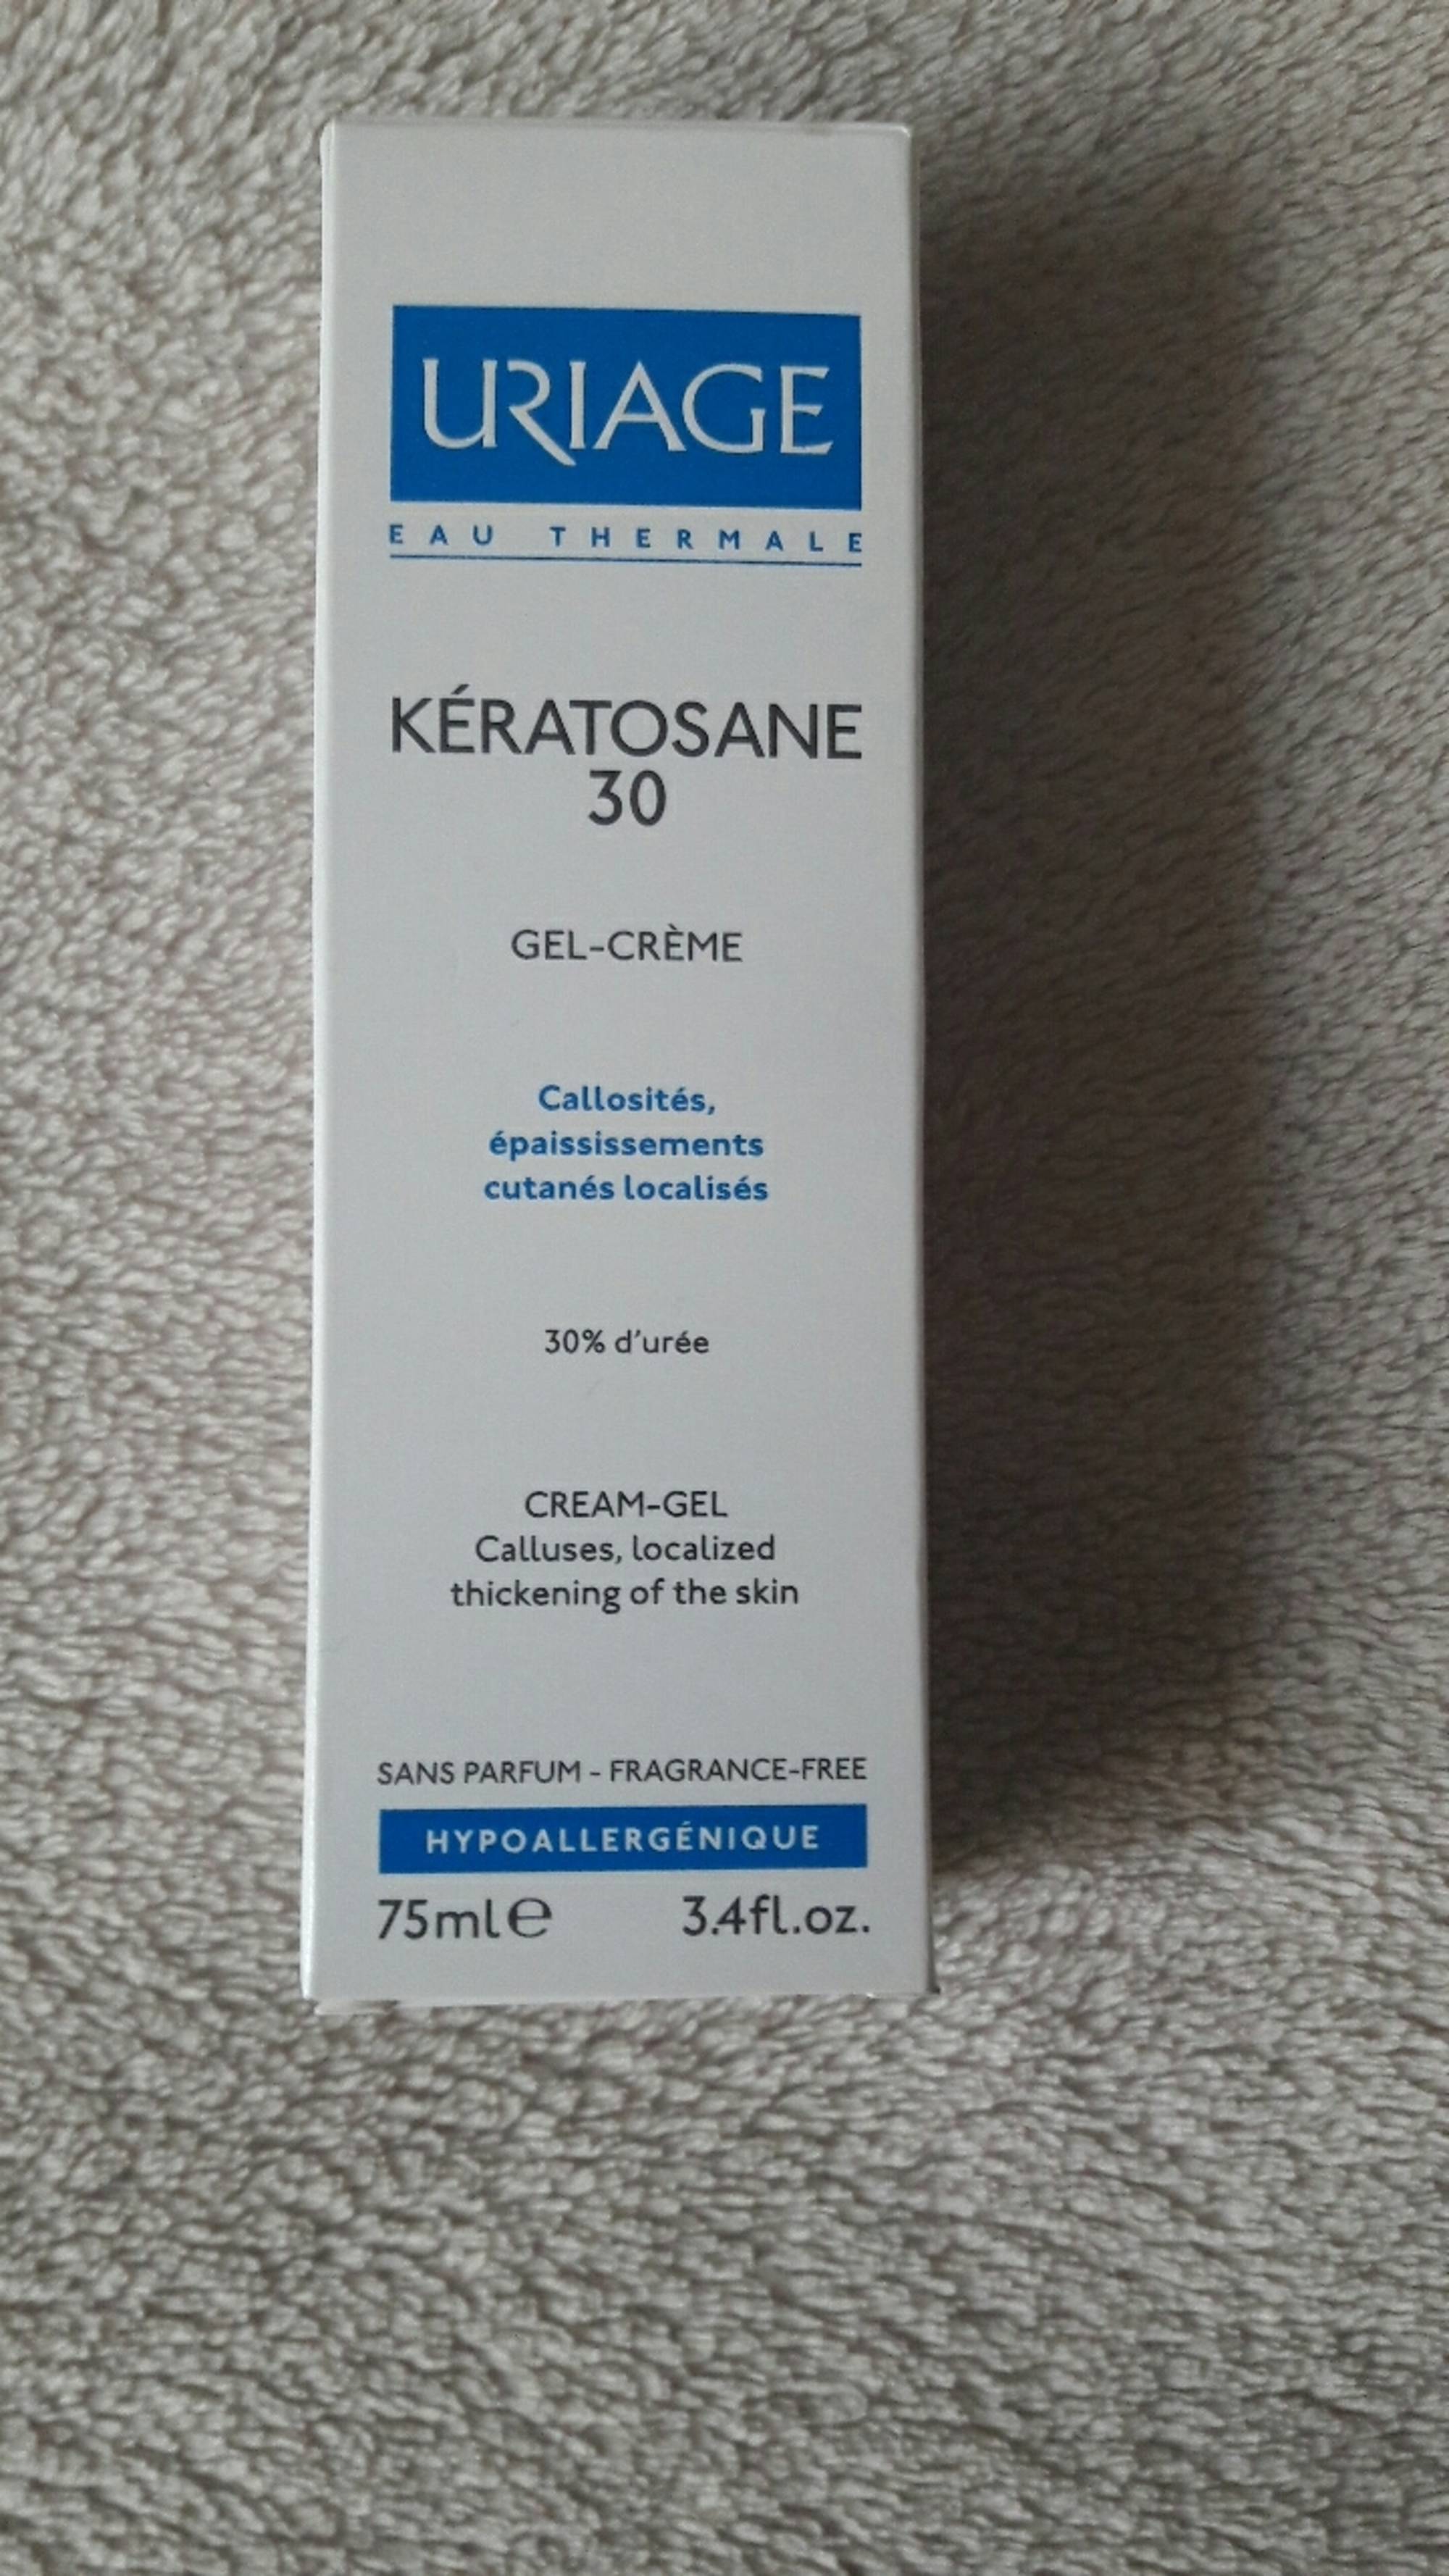 URIAGE - Kératosane 30 - Gel-crème